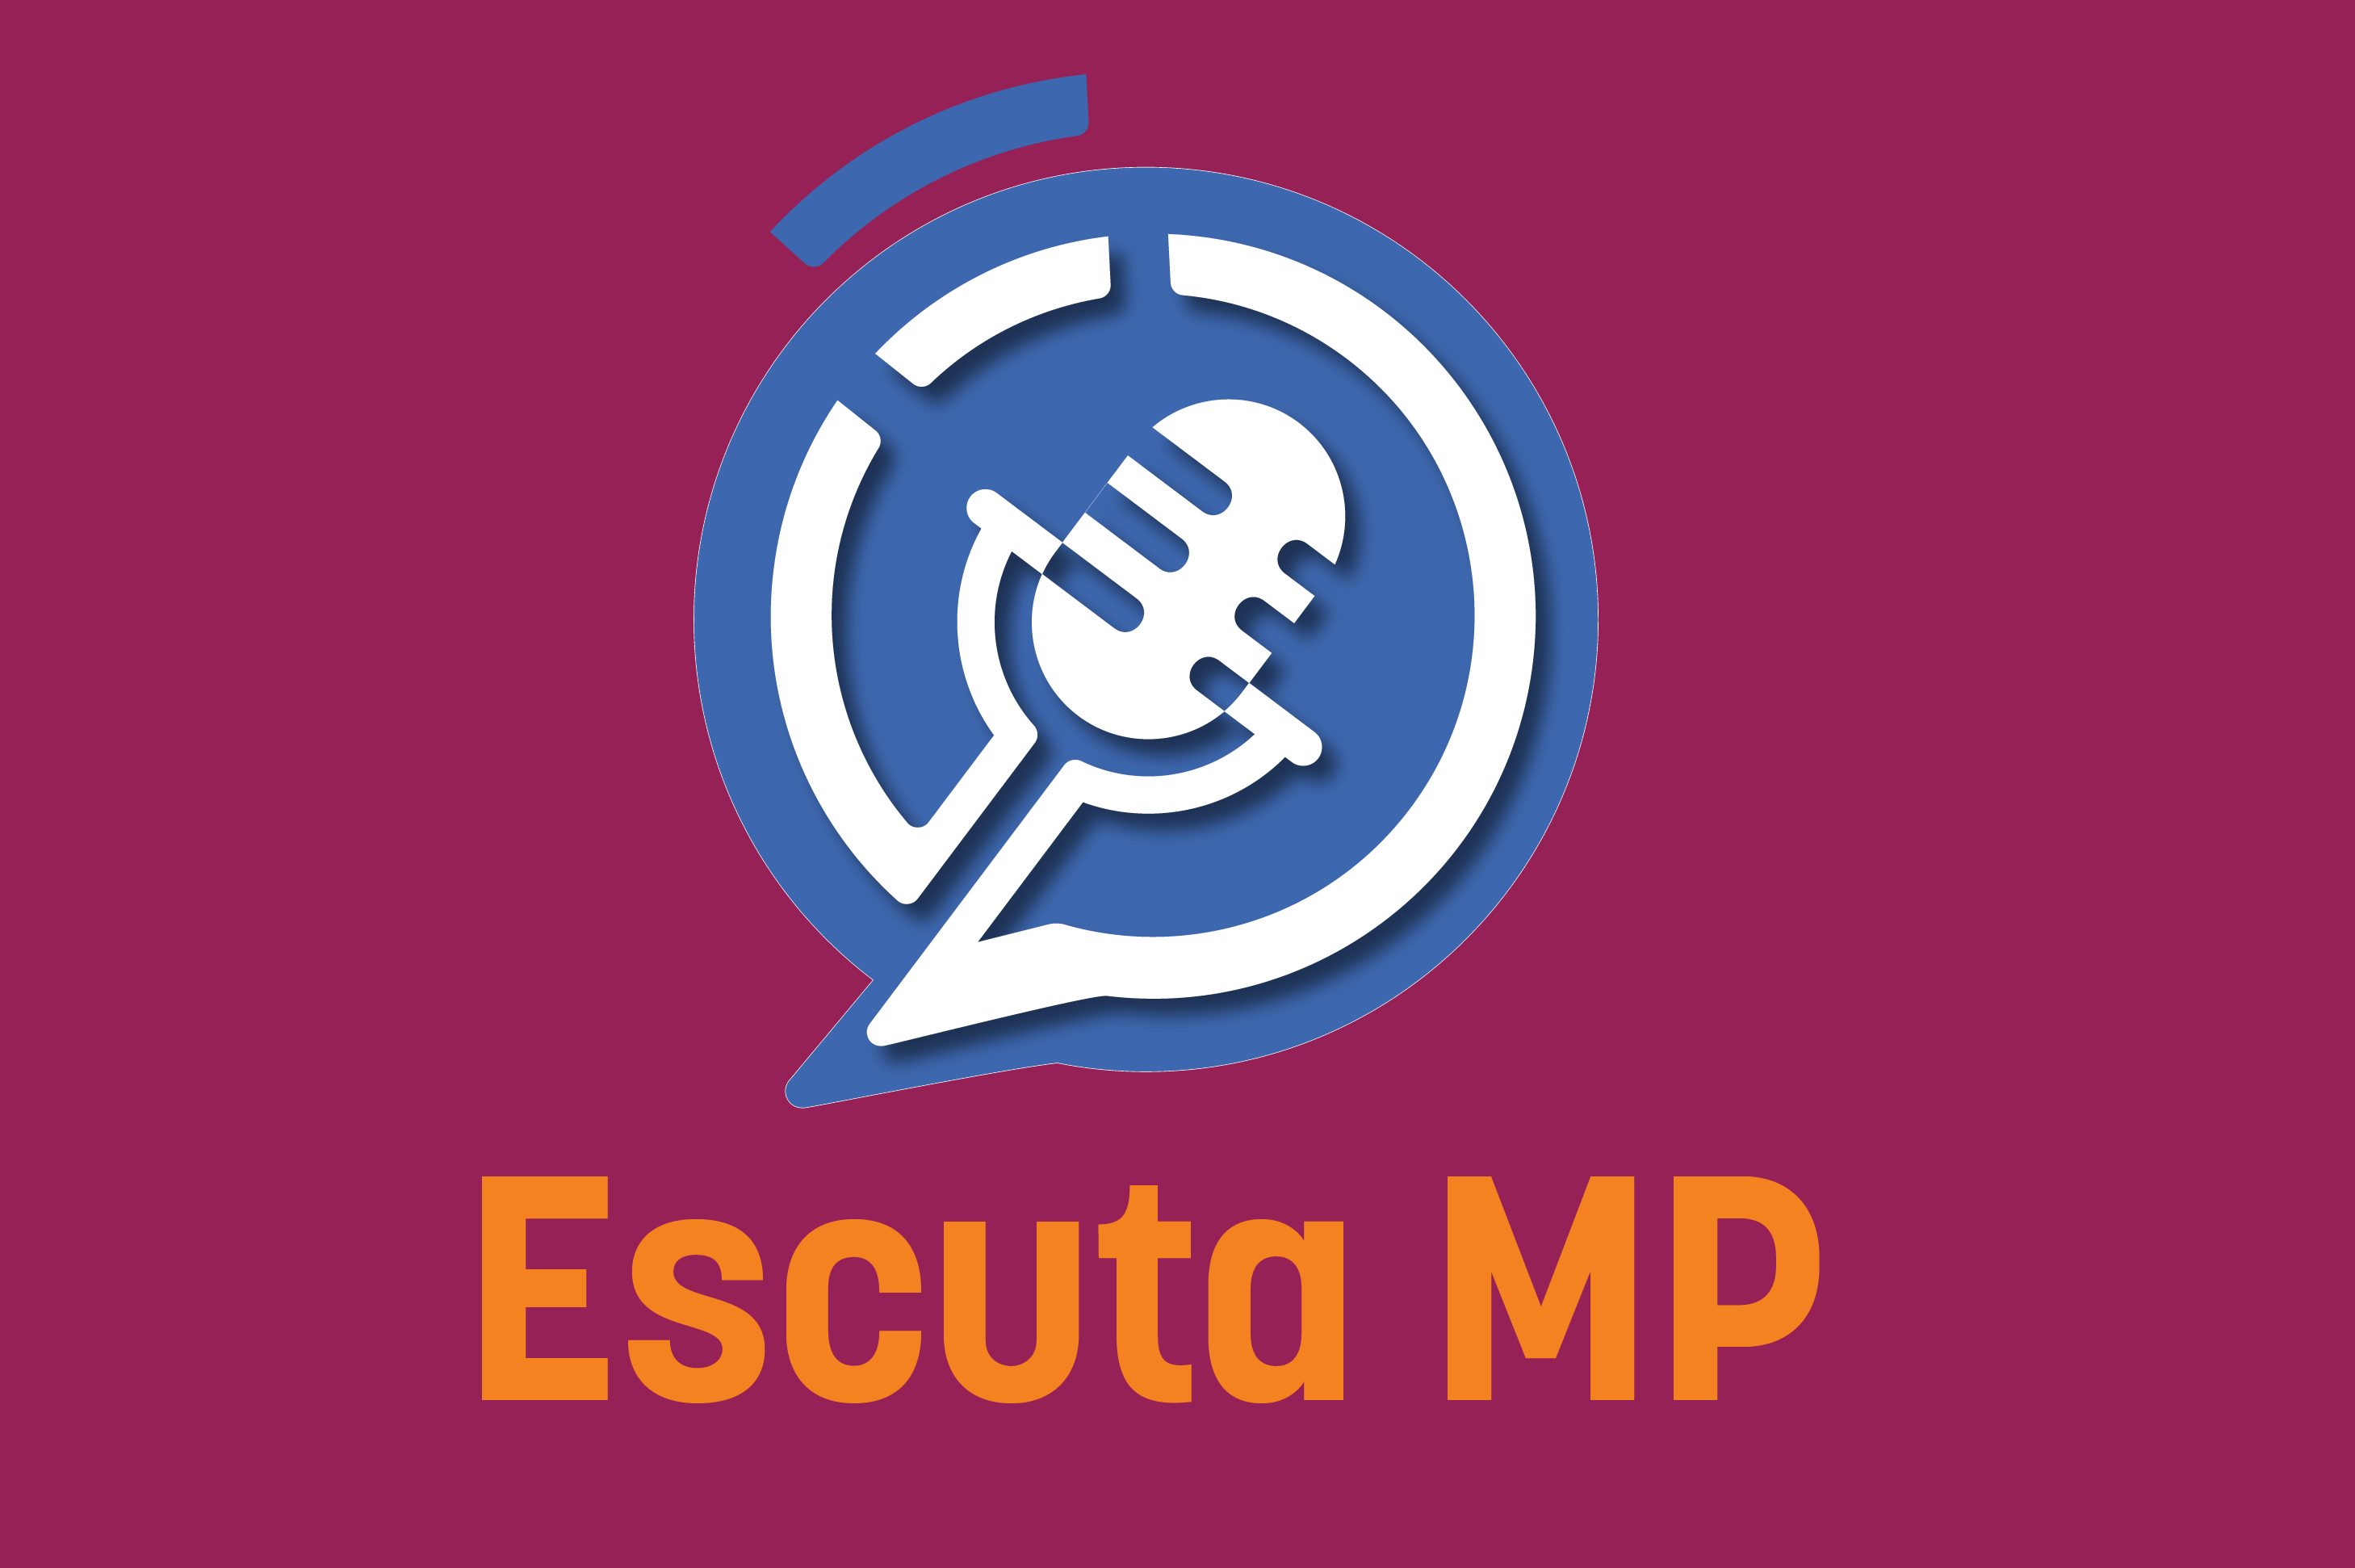 Logo do podcast Escuta MP com microfone